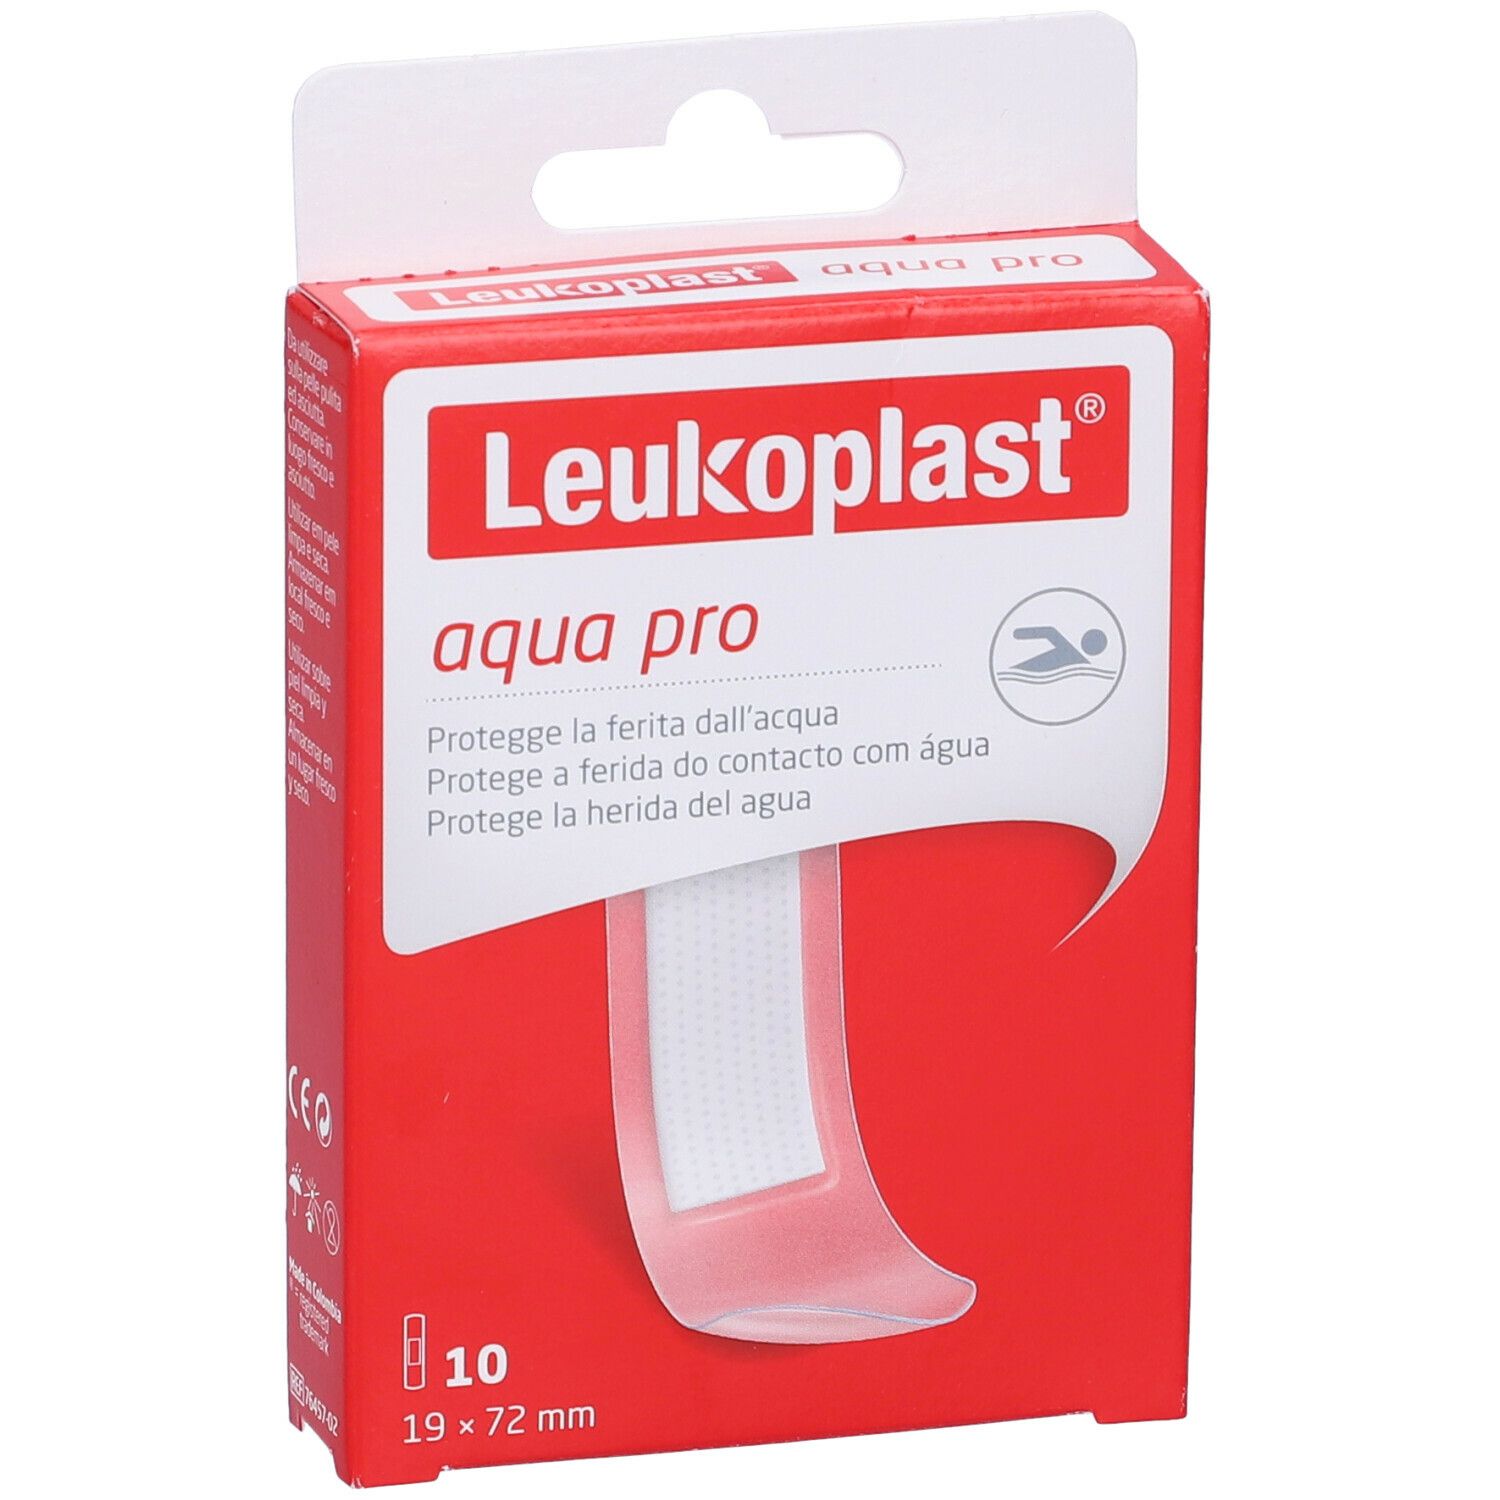 Leukoplast® Professional Aqua Pro